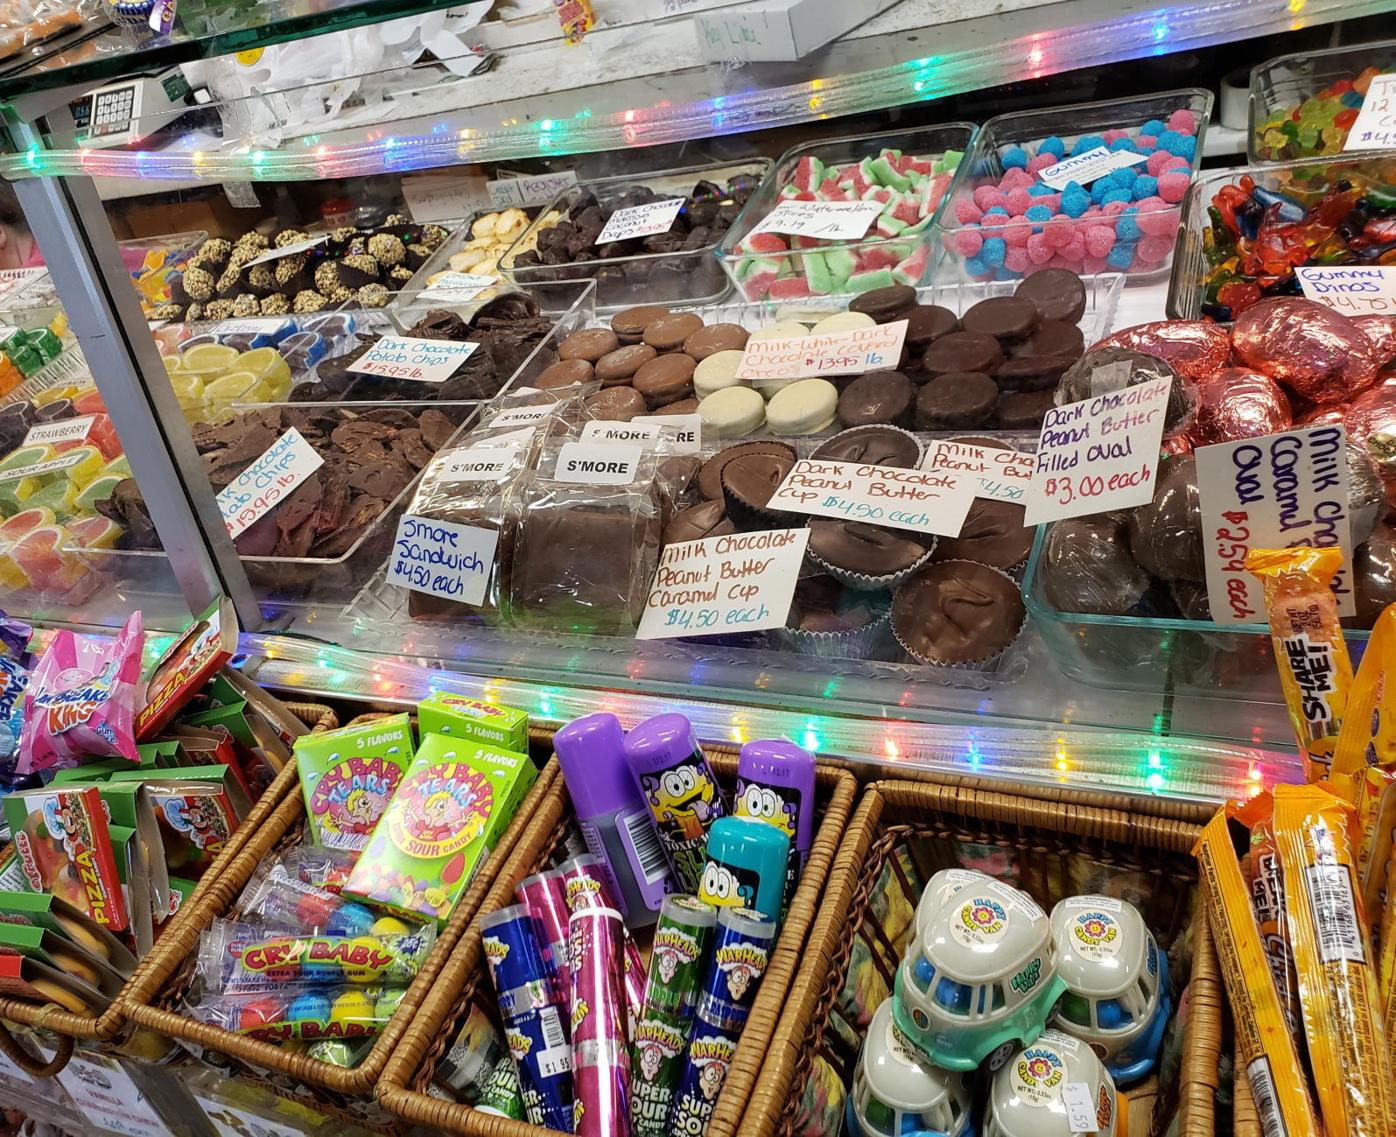 Bulk Candy – Chocolate Covered Gummy Bears – Grandpa Joe's Candy Shop